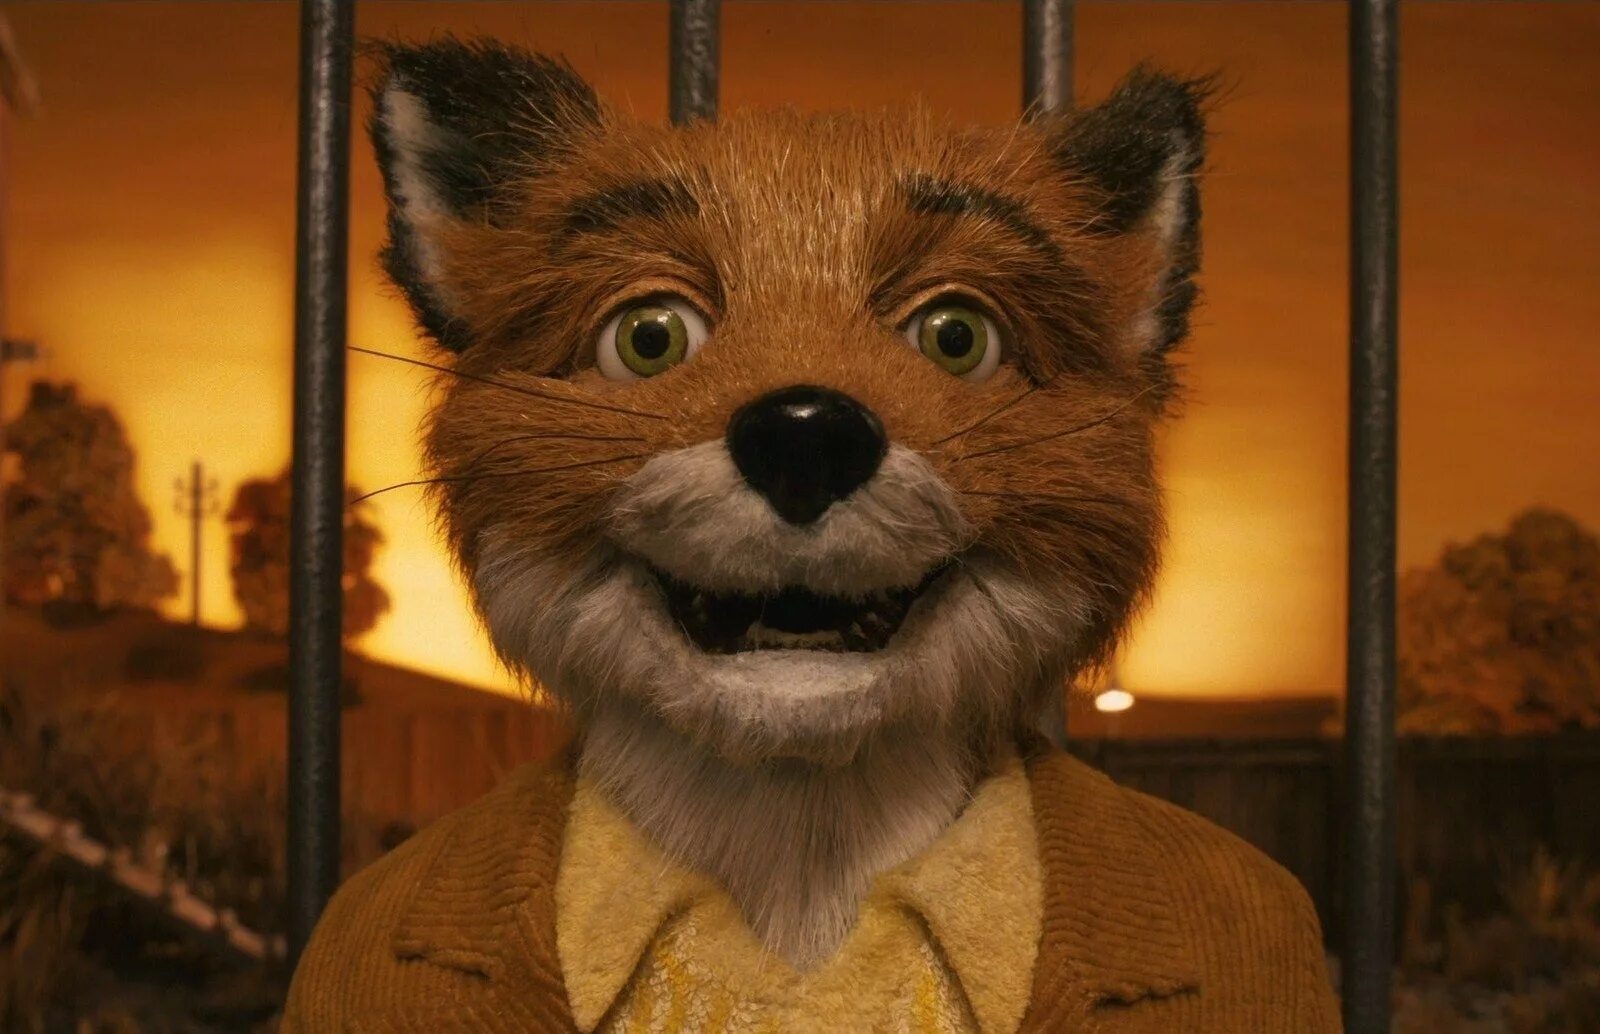 Бесподобный Мистер Фокс. Бесподобный Мистер Фокс (fantastic Mr. Fox), 2009. Уэс Андерсон бесподобный Мистер Фокс. Бесподобный Мистер ФОК.